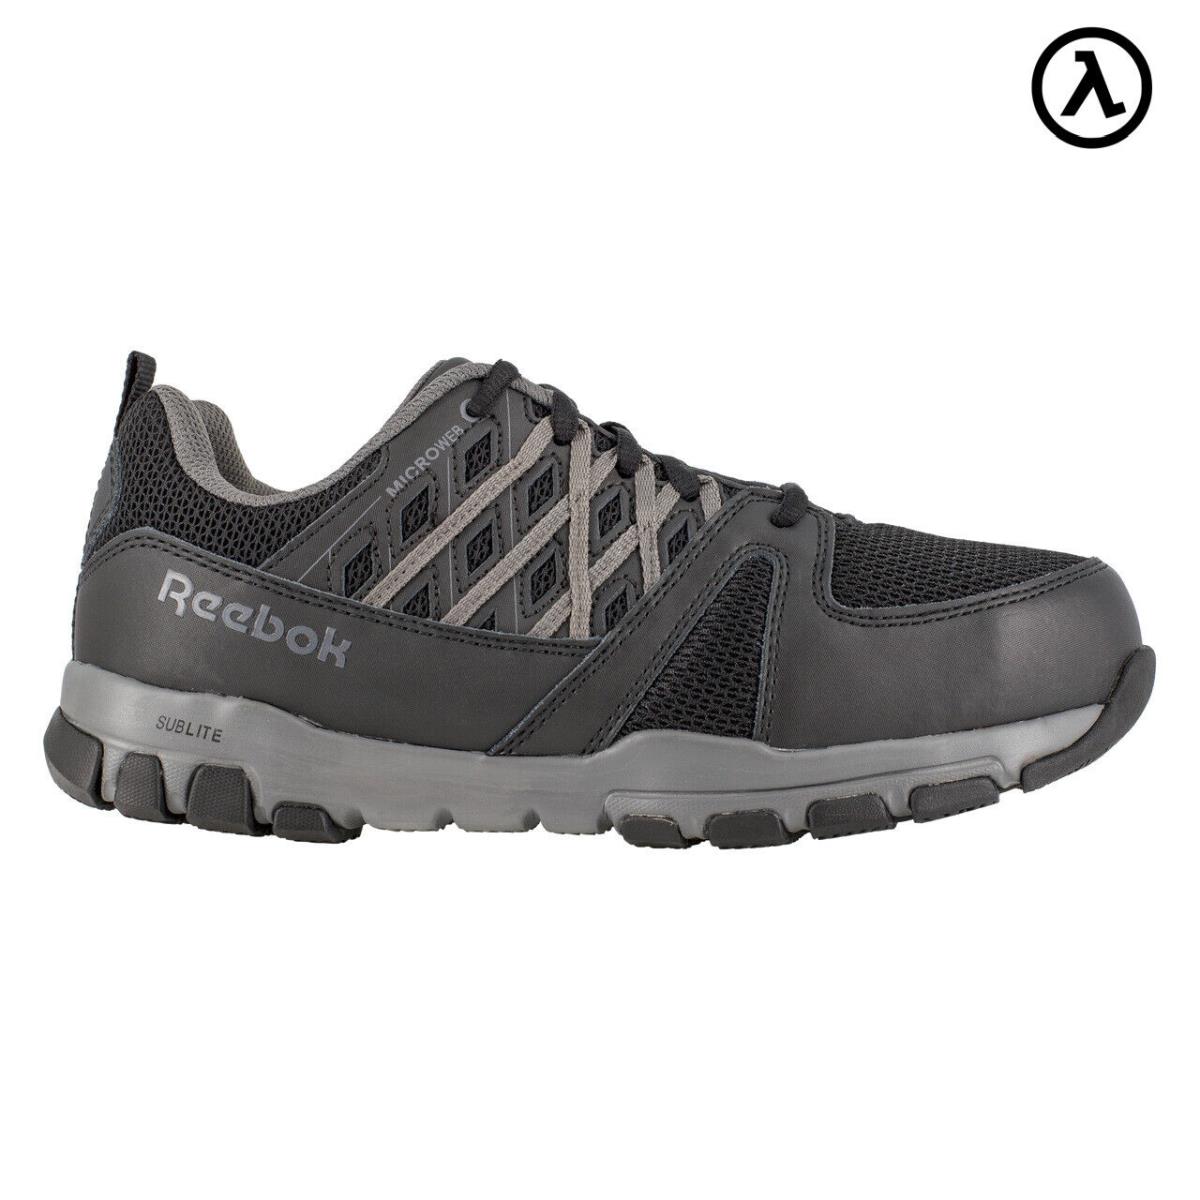 Reebok Sublite Work Men`s Athletic Work Shoe Black with Grey Trim Boots RB4016